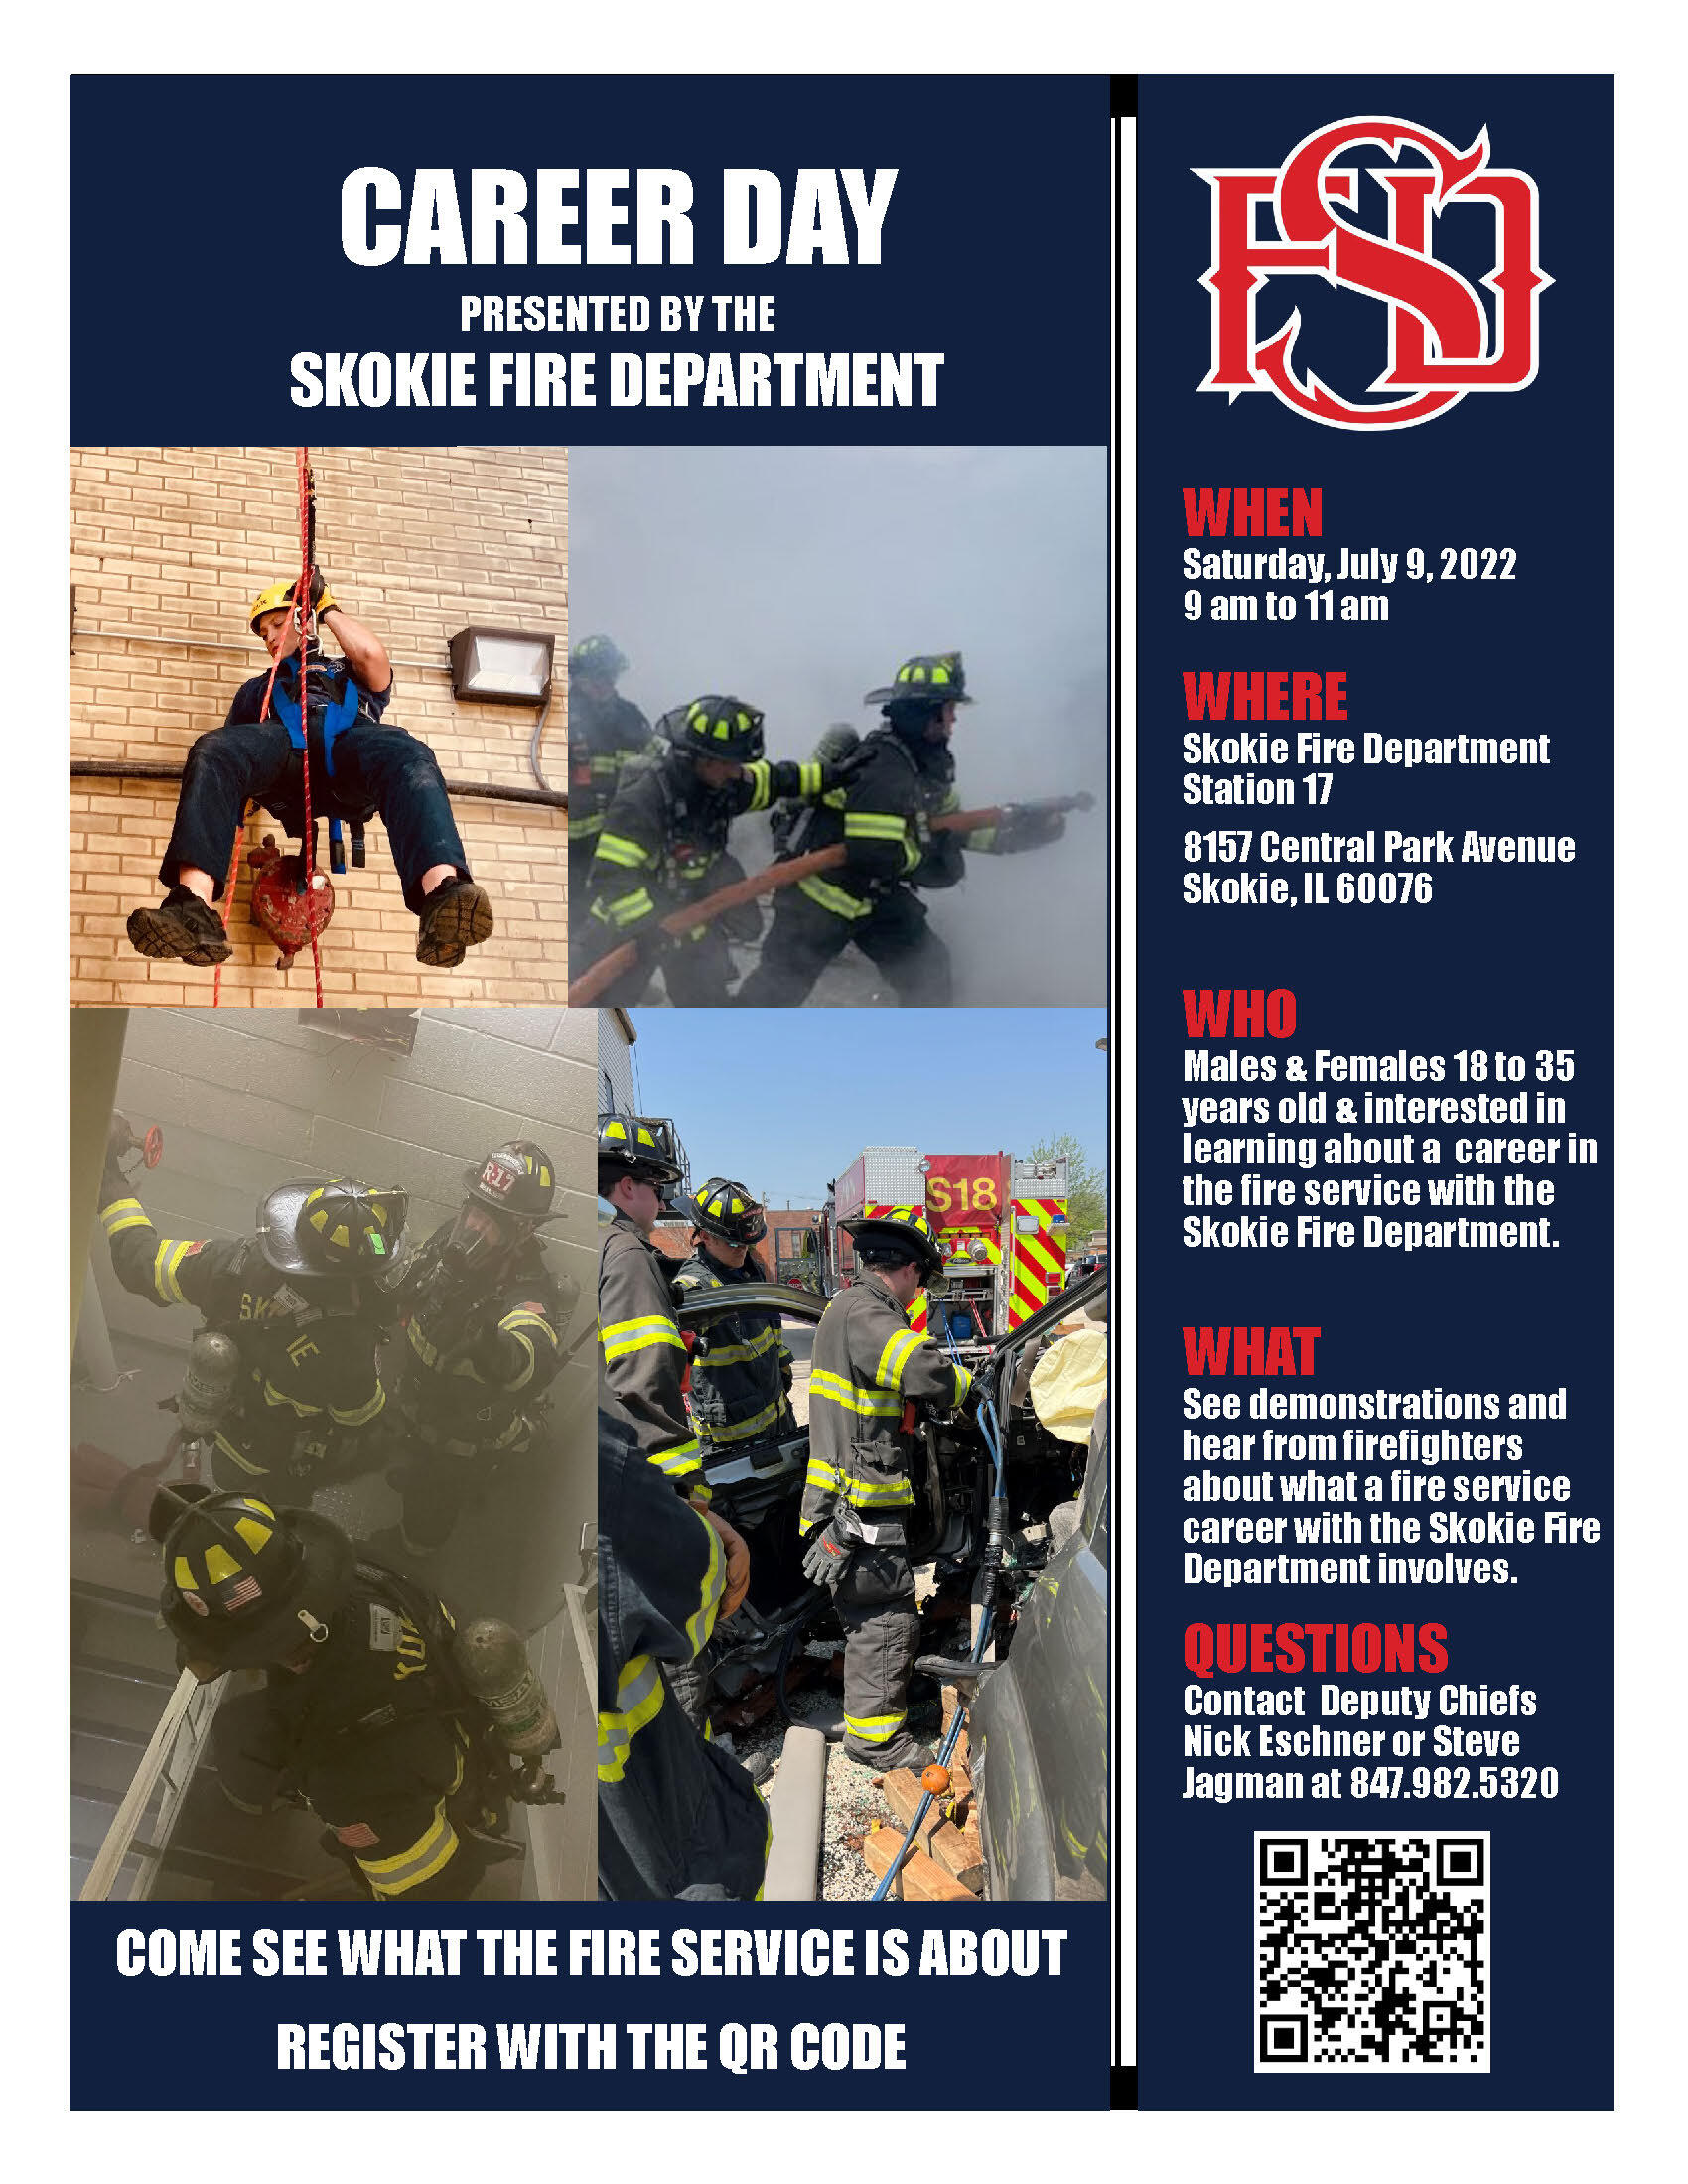 Skokie Fire Department Career Day flyer